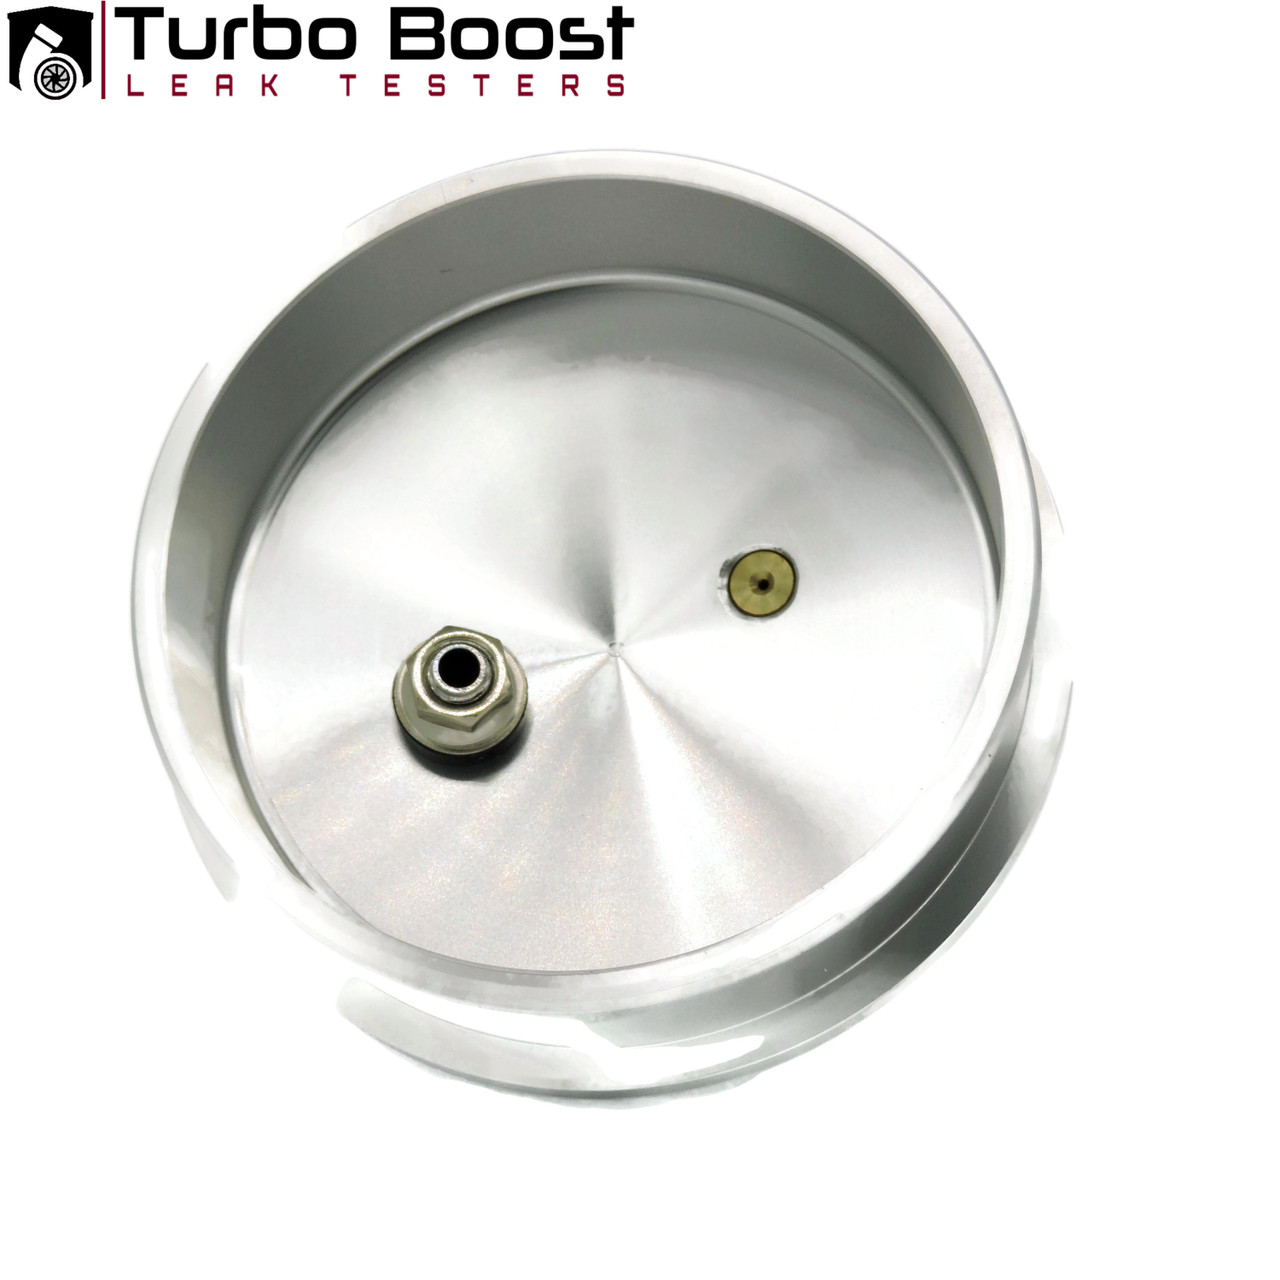 5.5" Pro-Kit Turbo Boost Leak Tester - Billet 6061 Aluminum